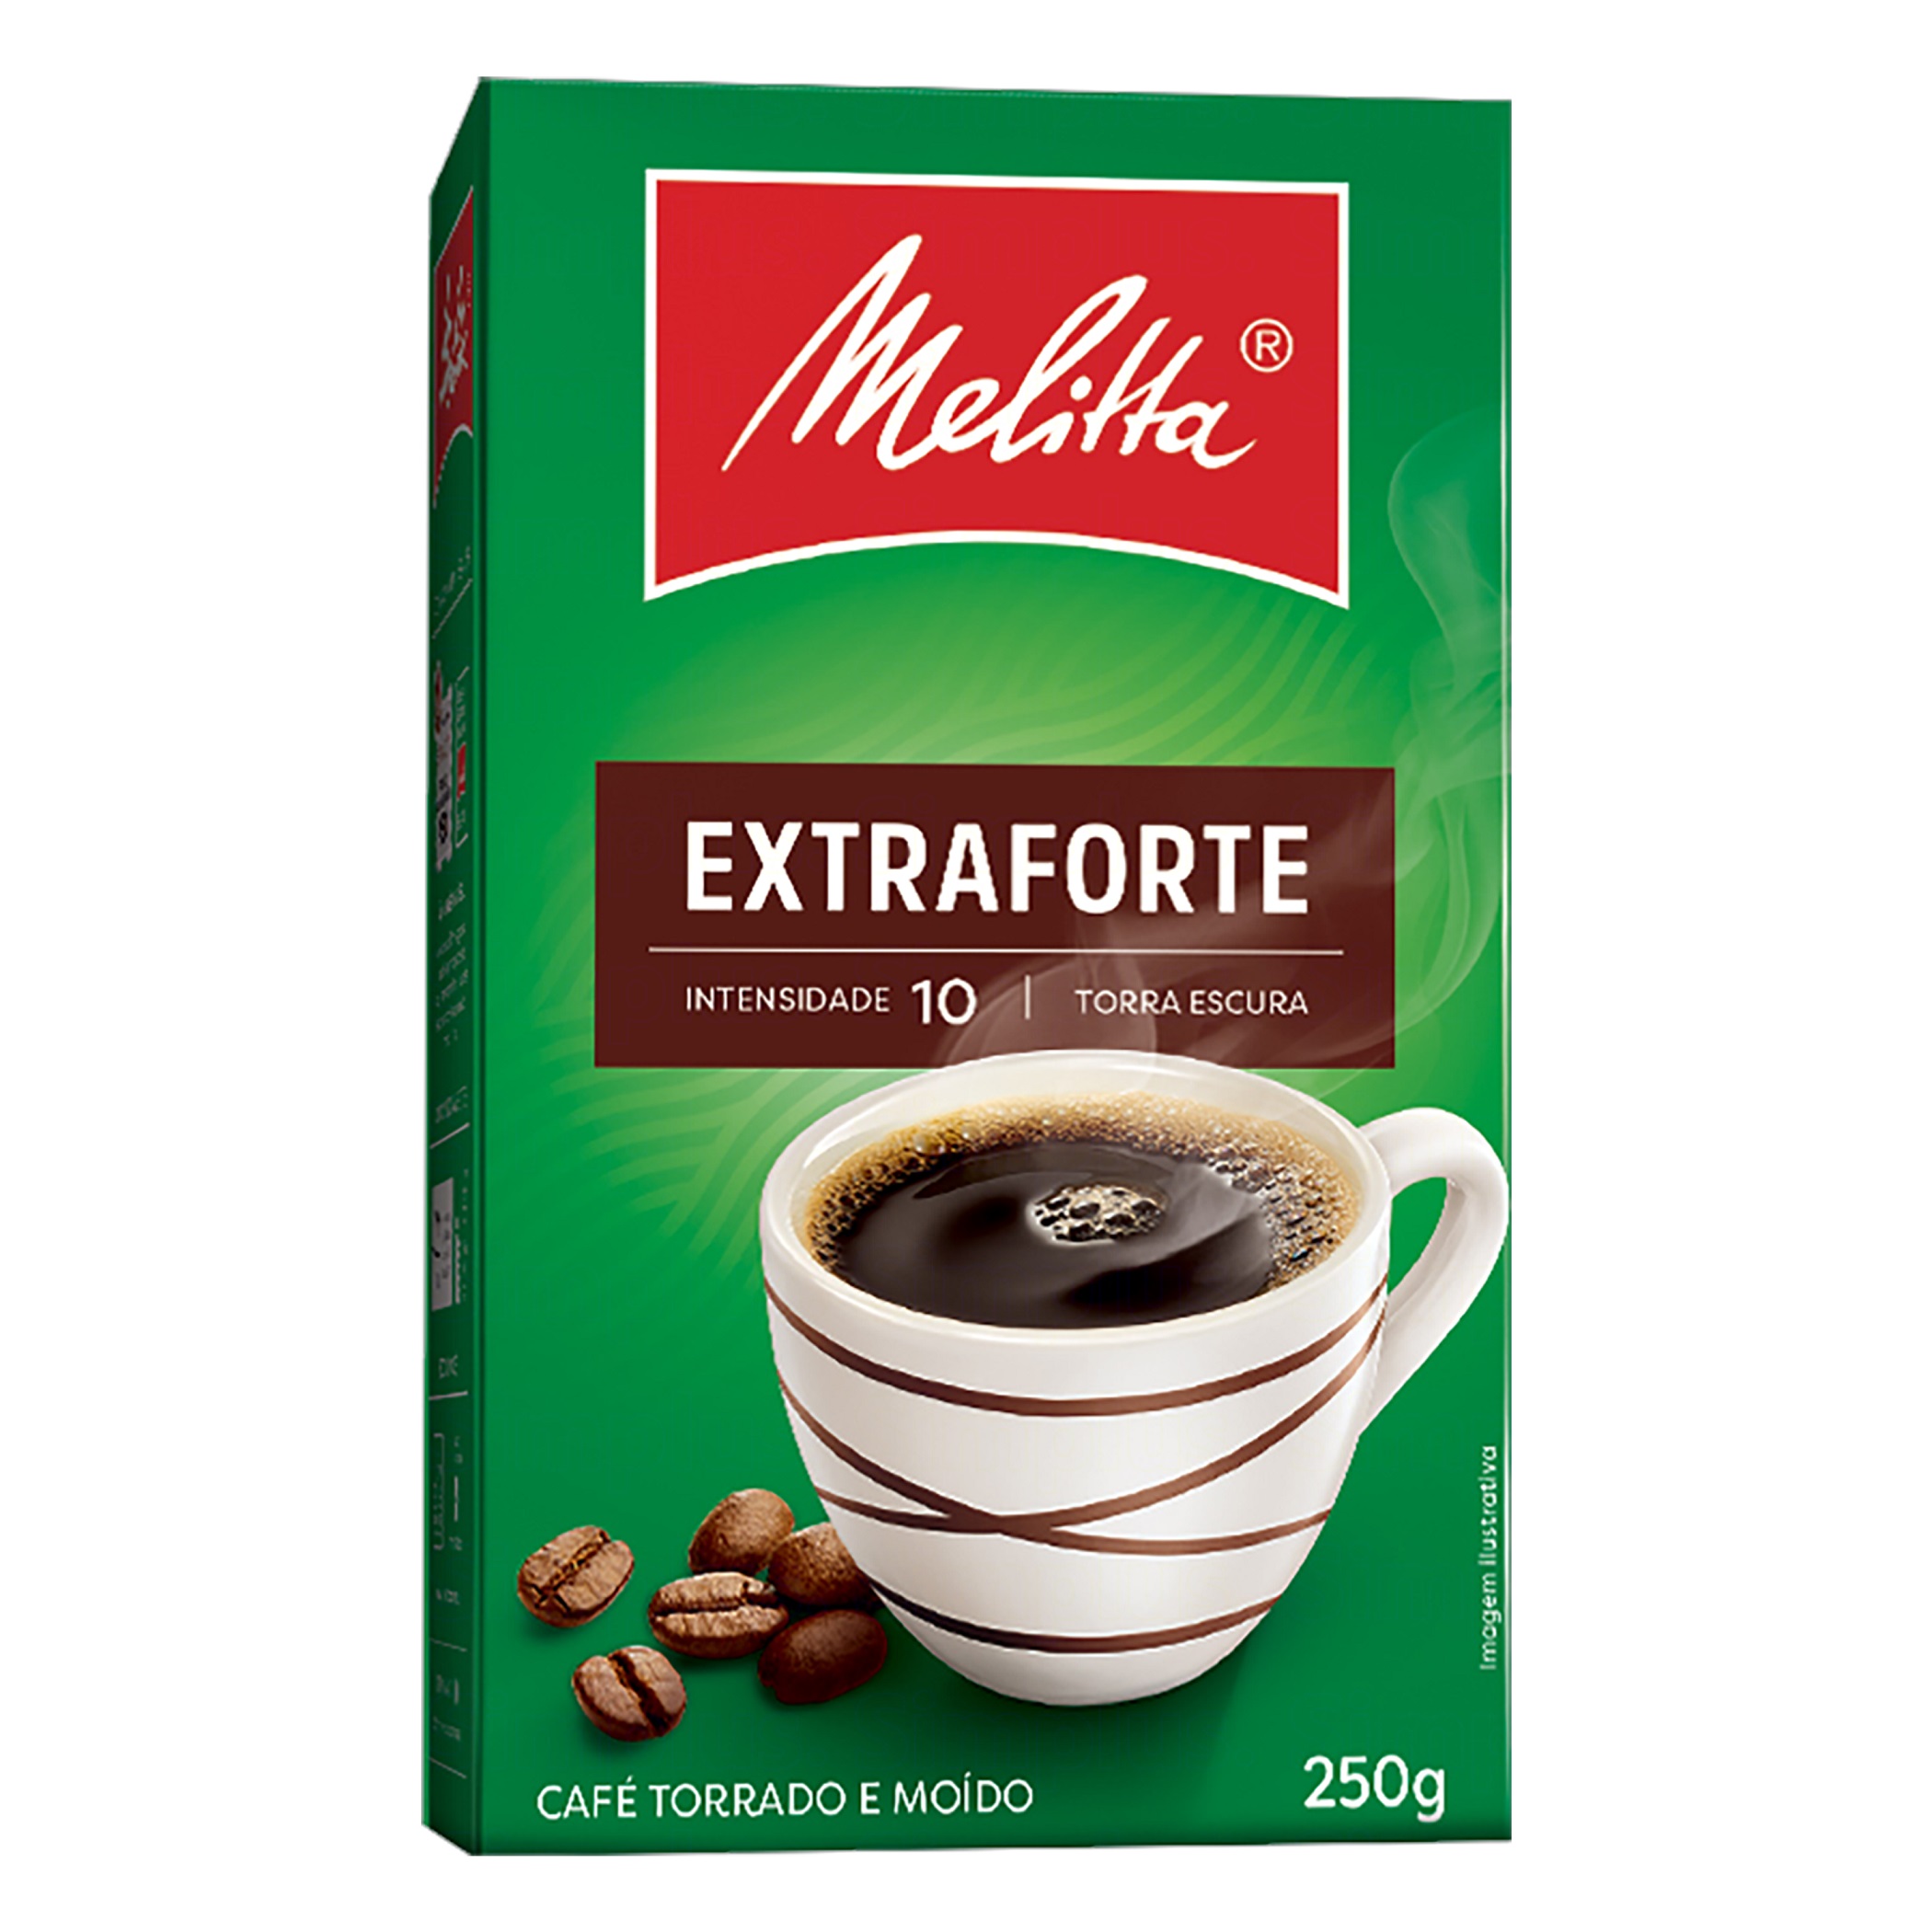 https://www.brmart.com/uploads/produtos/463_bck-base_pt-br-caf-u00e9-en-us-coffee_pt-br-caf-u00e9-torrado-extra-forte-250g-en-us-extra-strong-roasted-coffee-8-82-oz.jpg